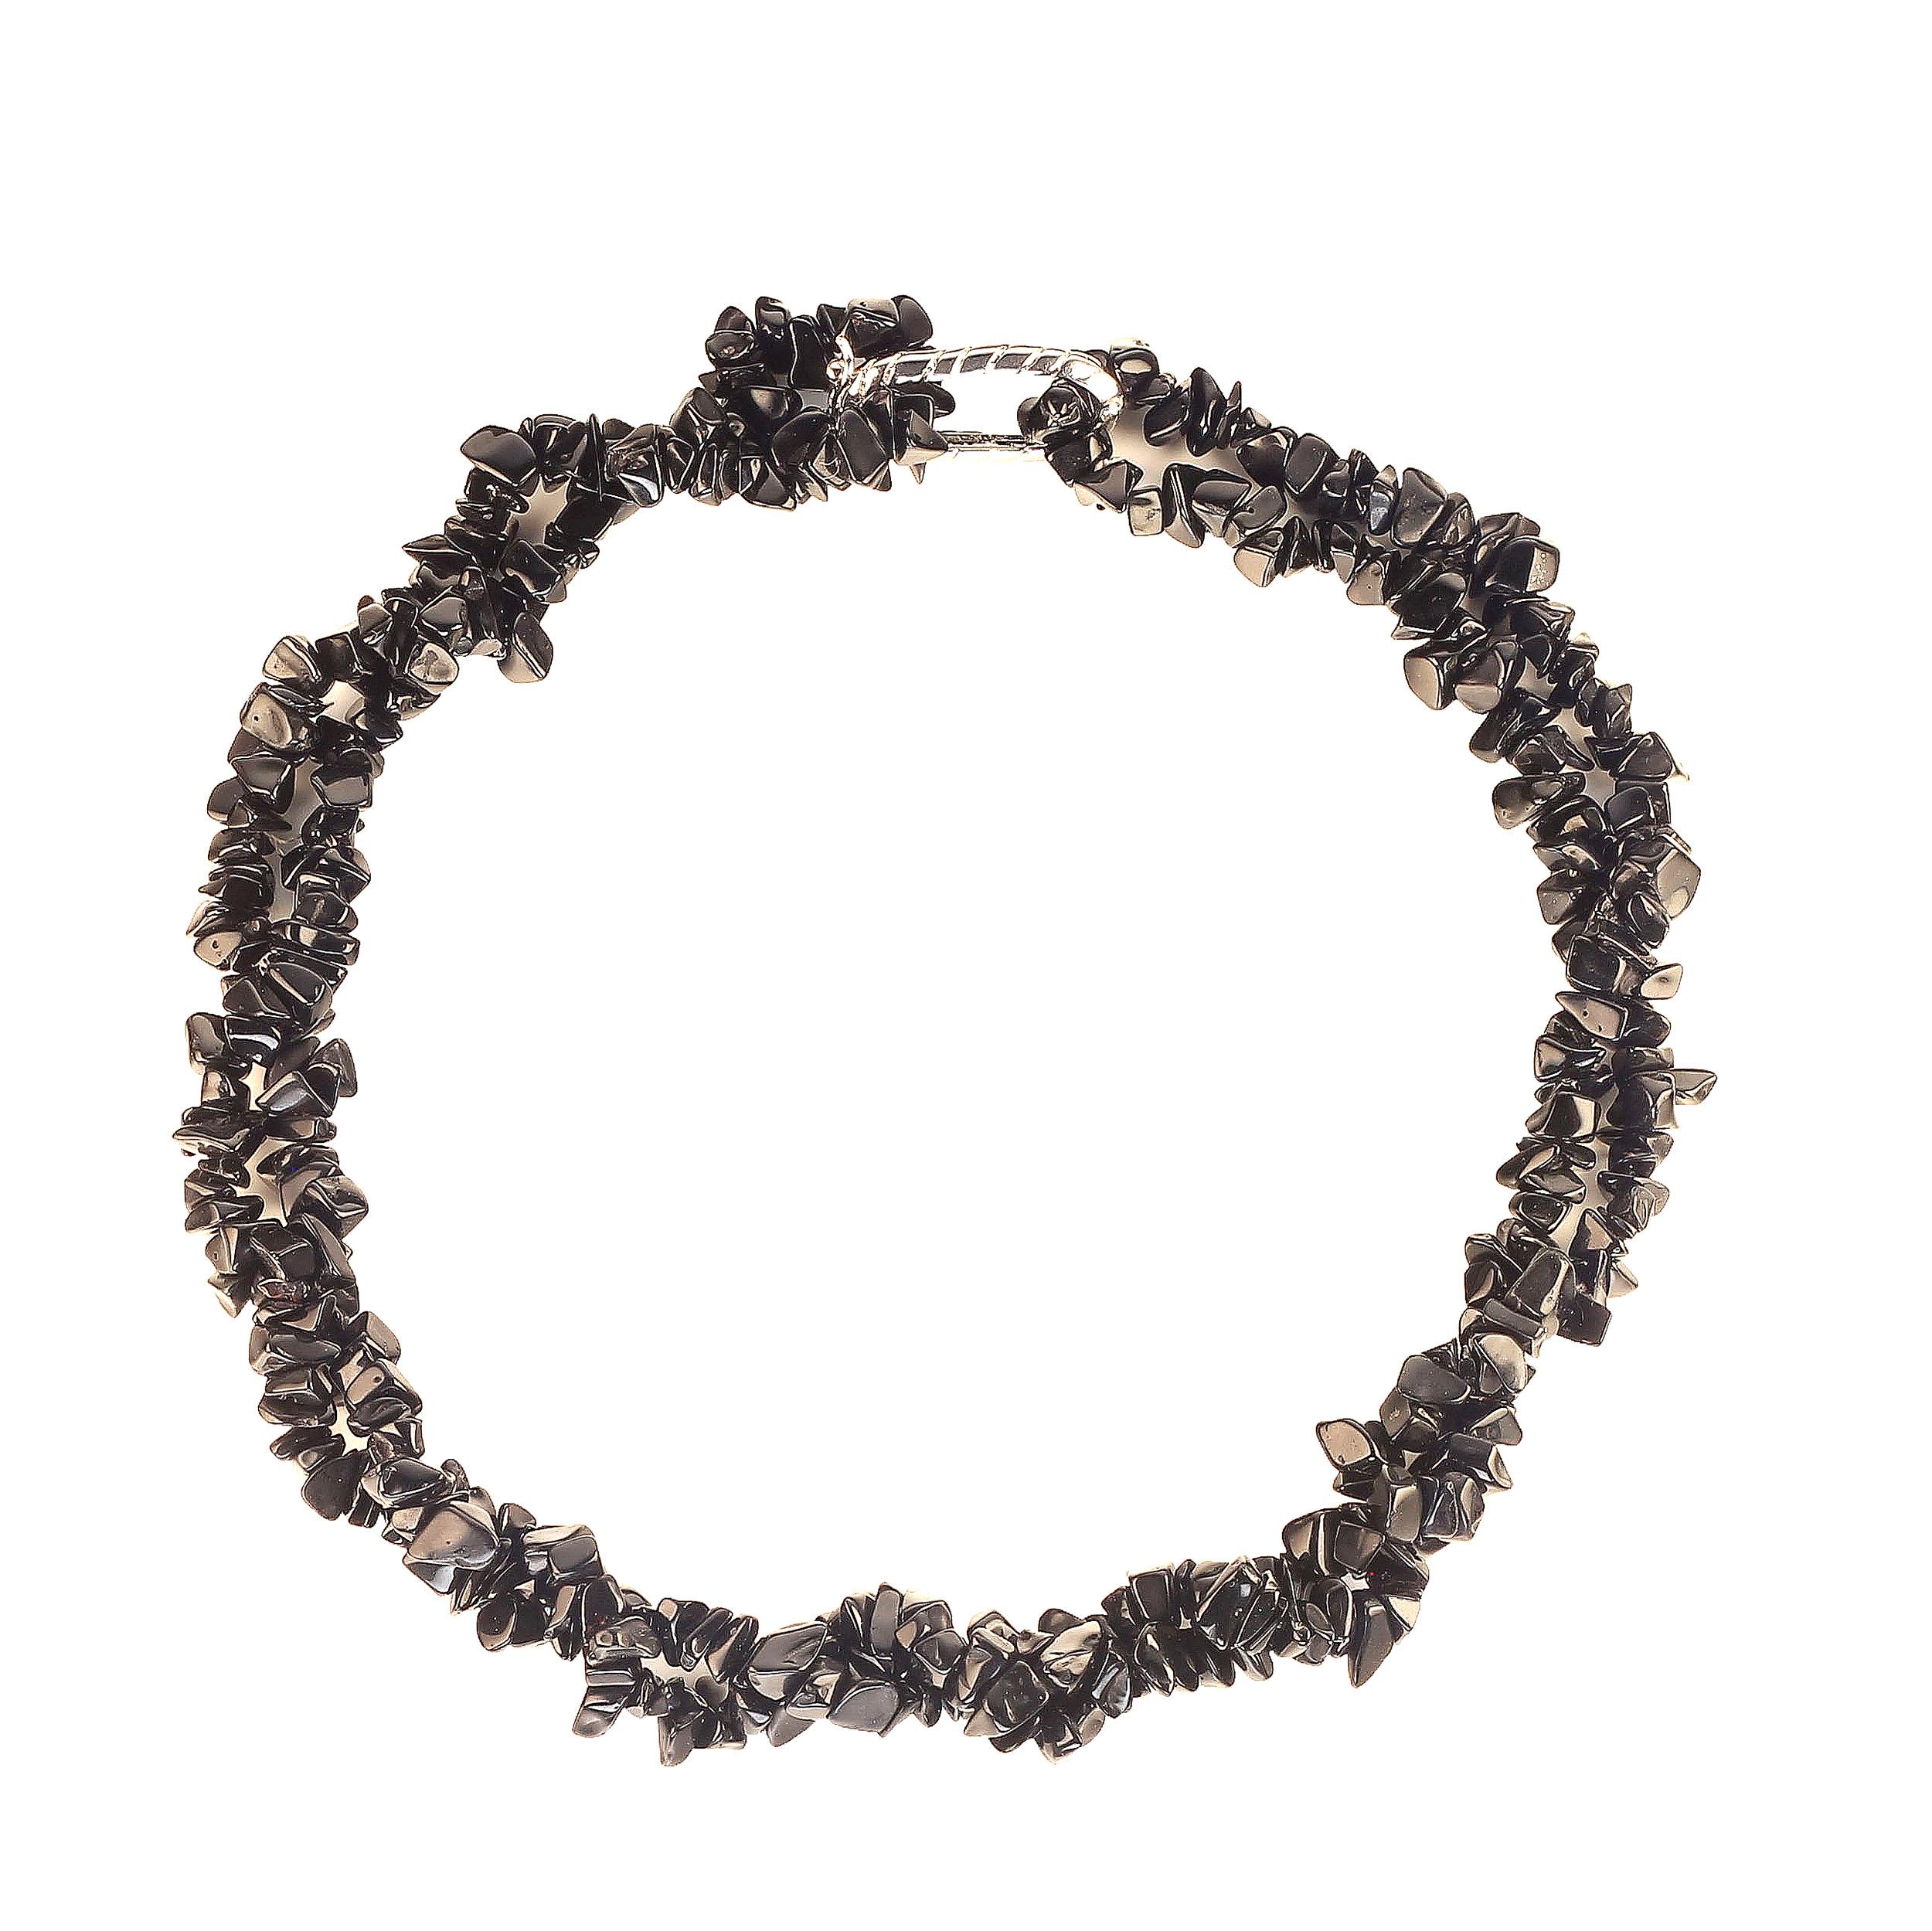 Bead AJD Elegant Black Onyx Chip Necklace  Great Gift!!